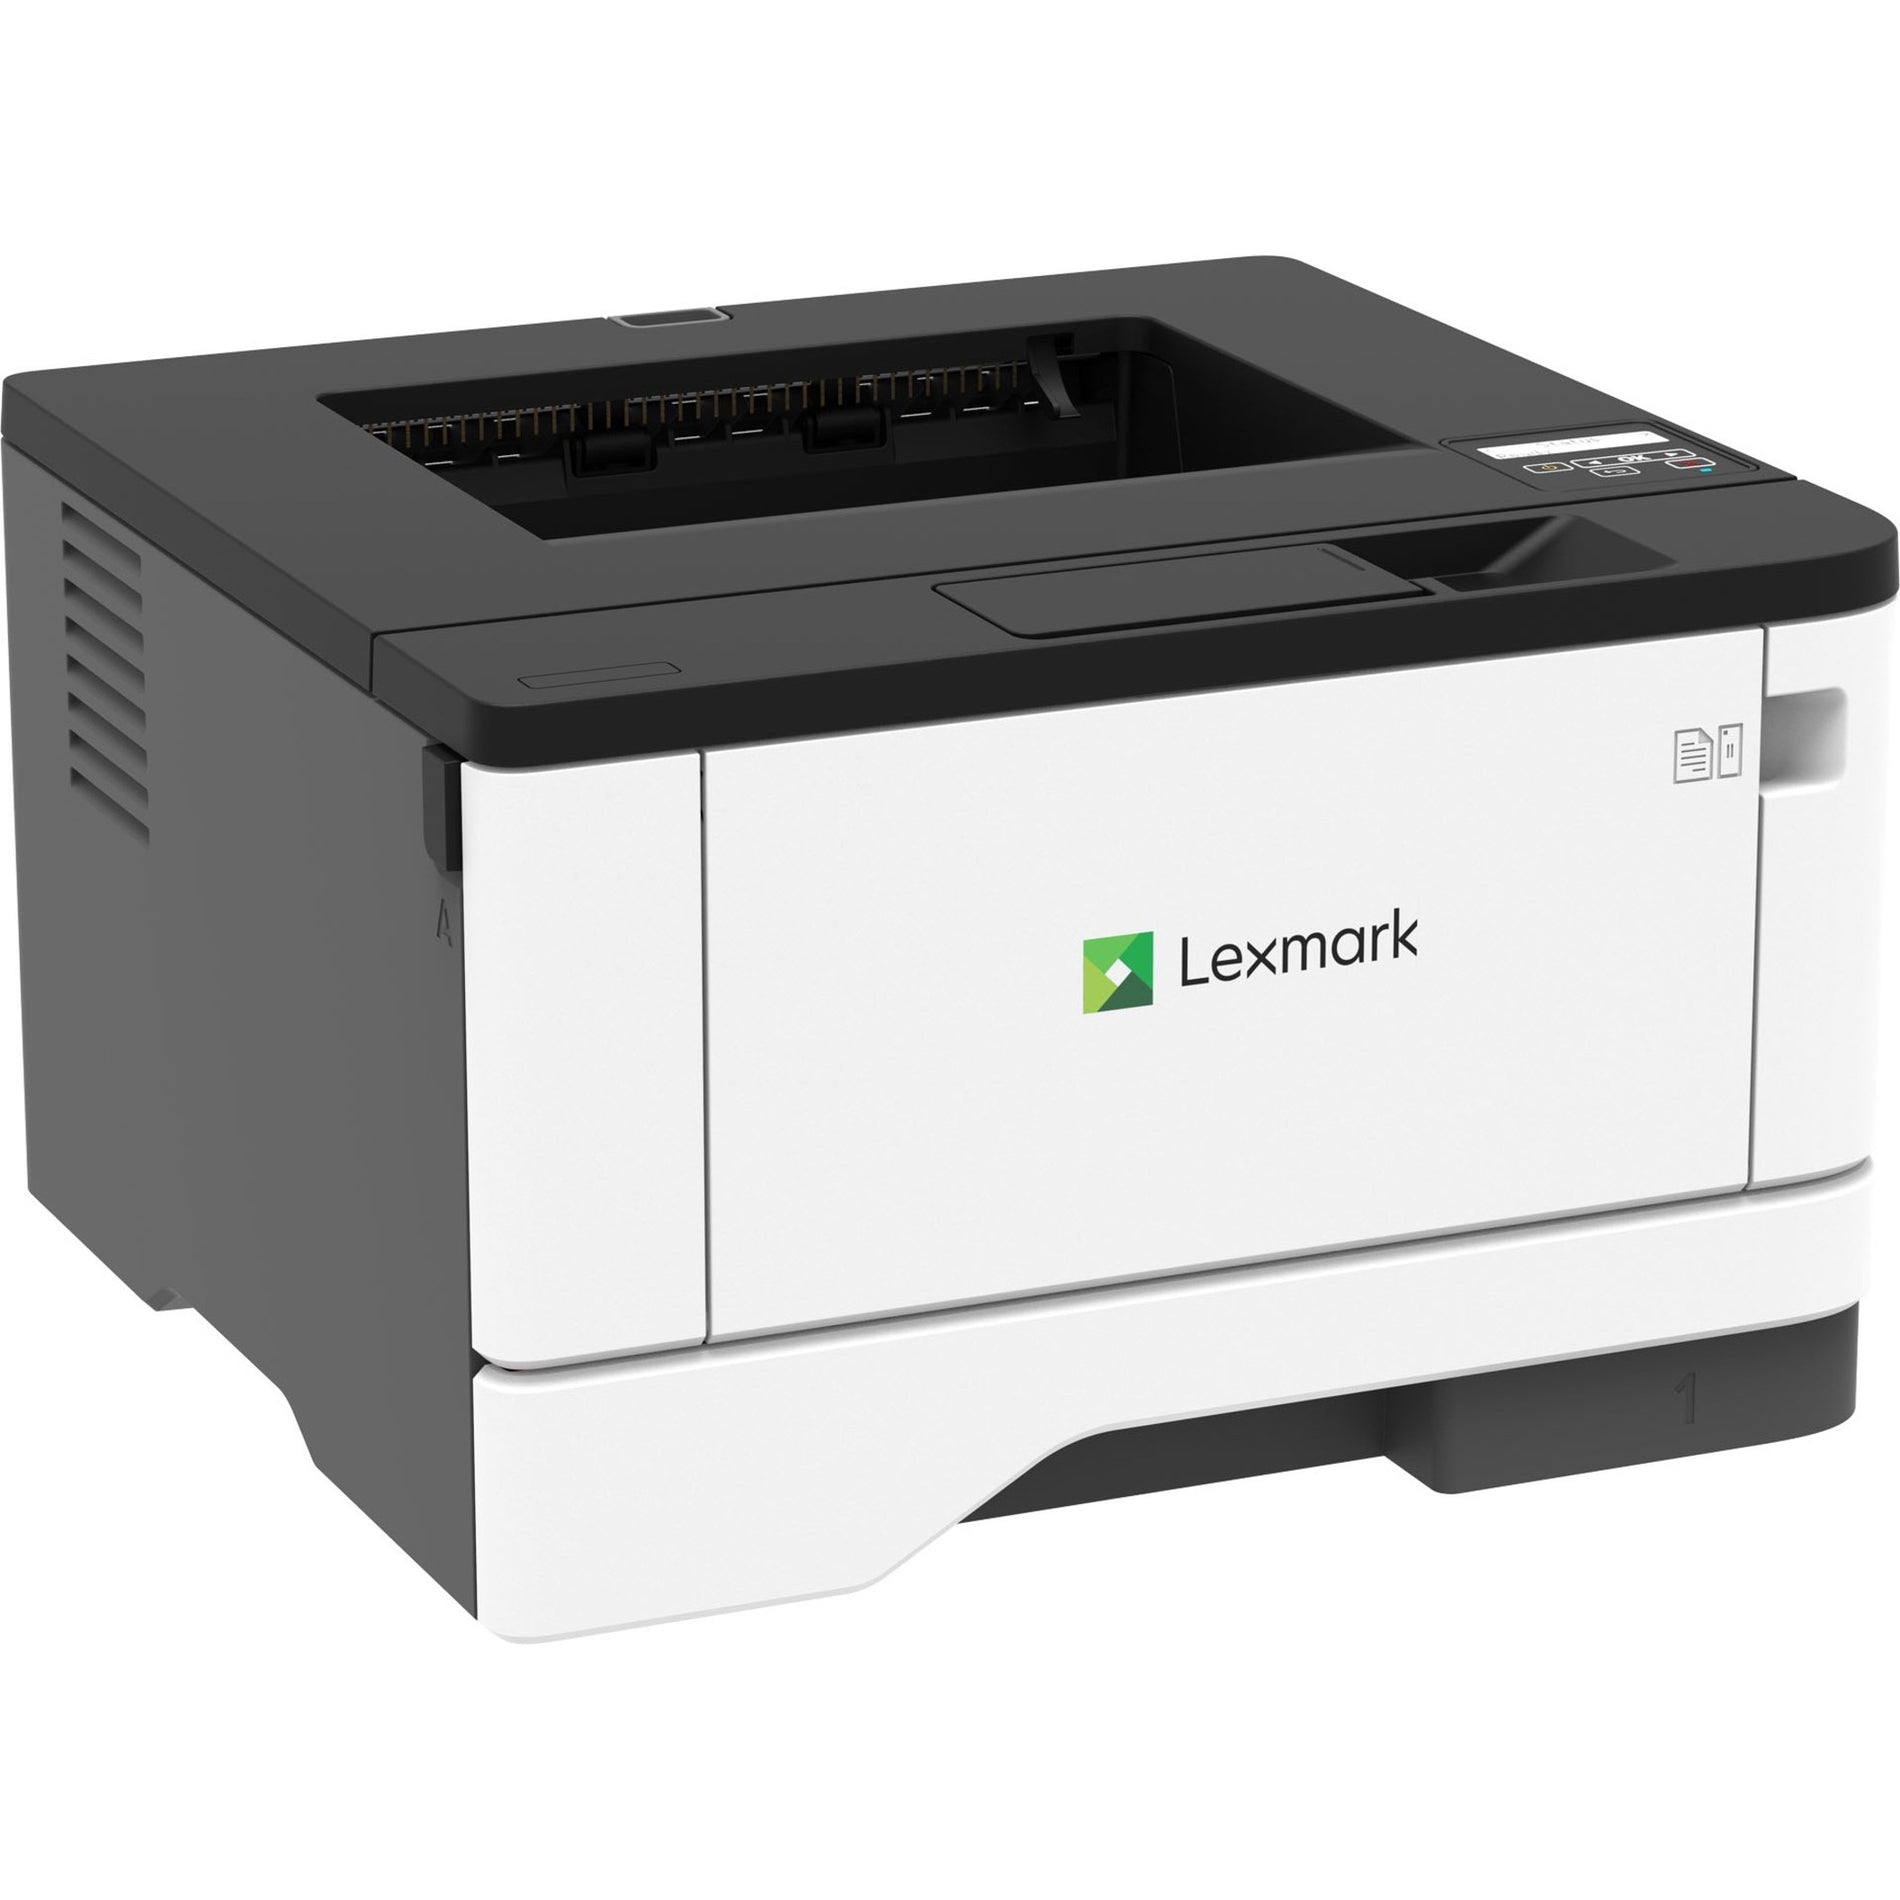 Lexmark 29S0250 B3340DW Laser Printer, Monochrome, Automatic Duplex Printing, 40 ppm, 2400 dpi